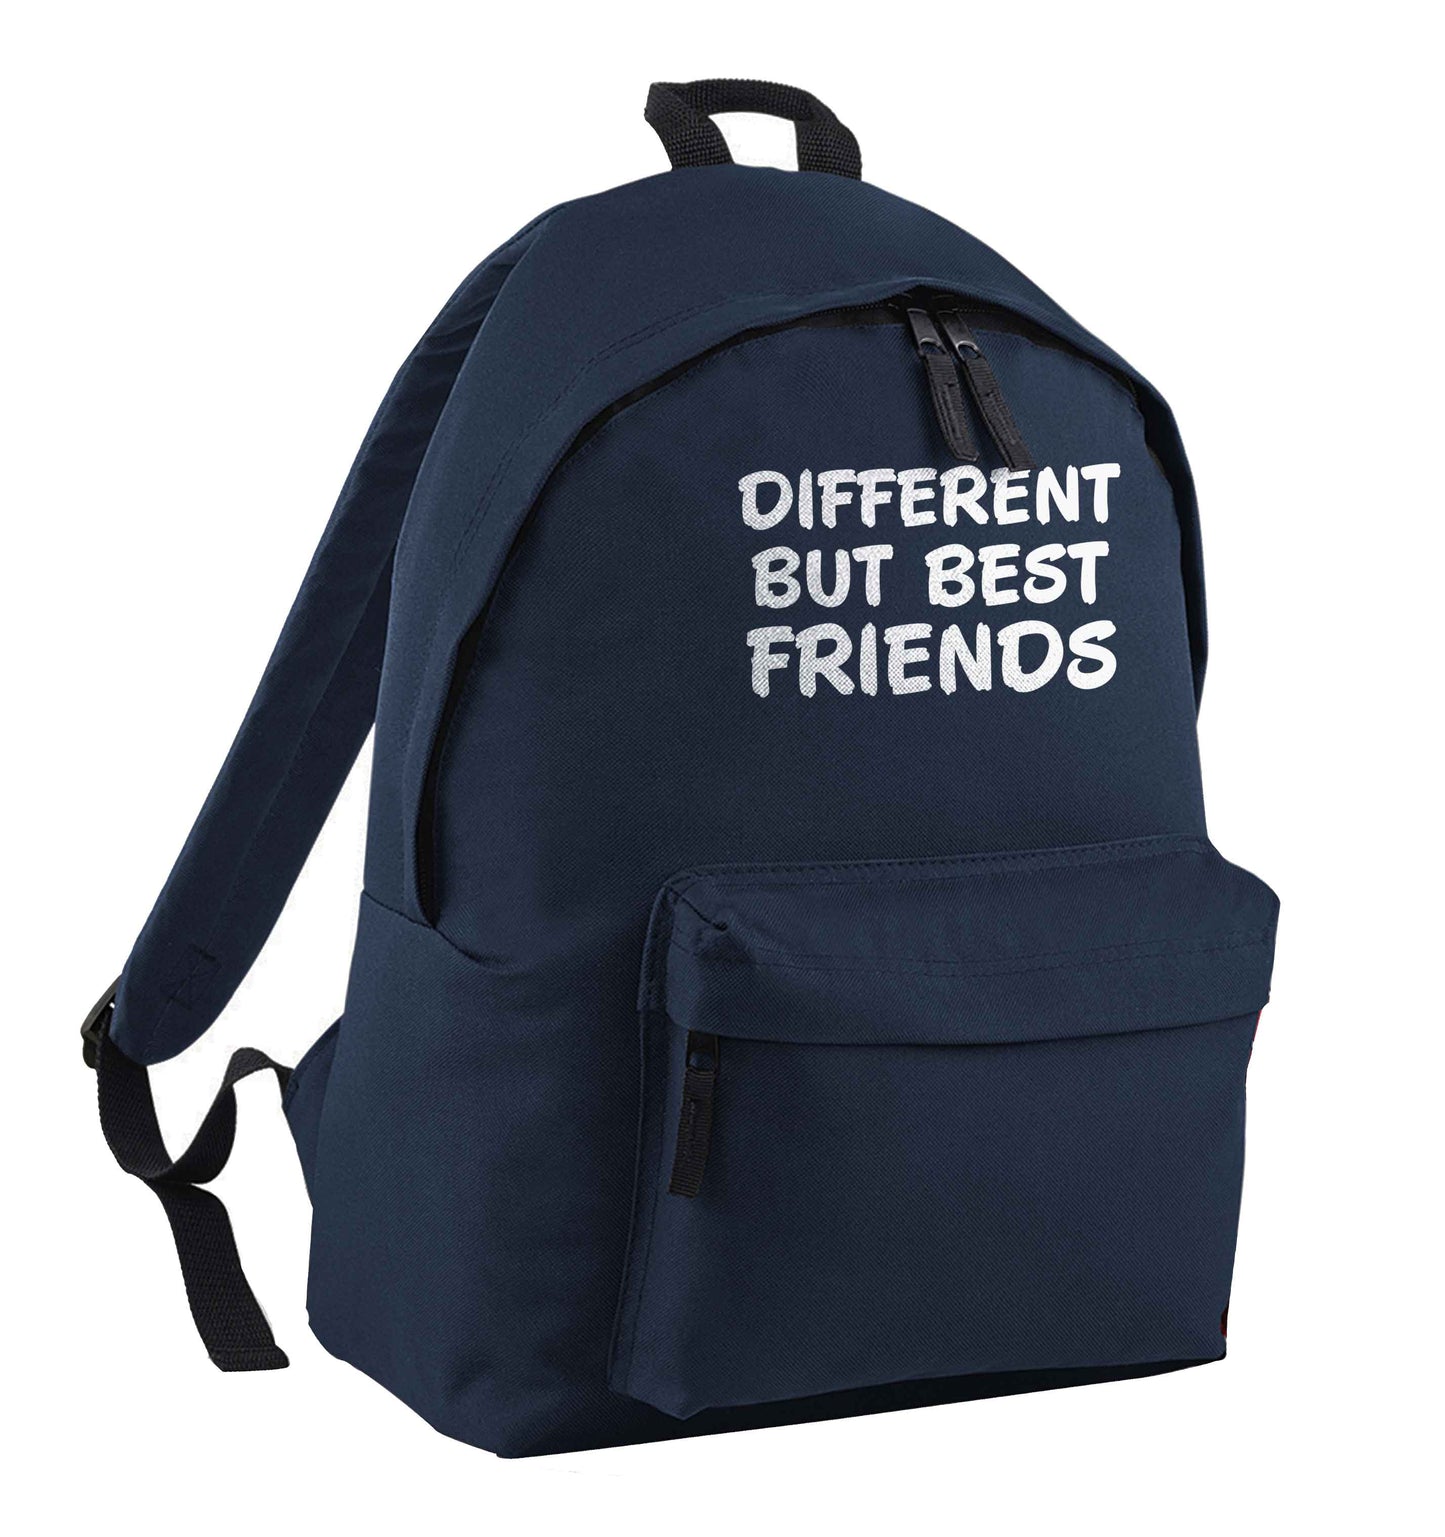 Different but best friends navy children's backpack